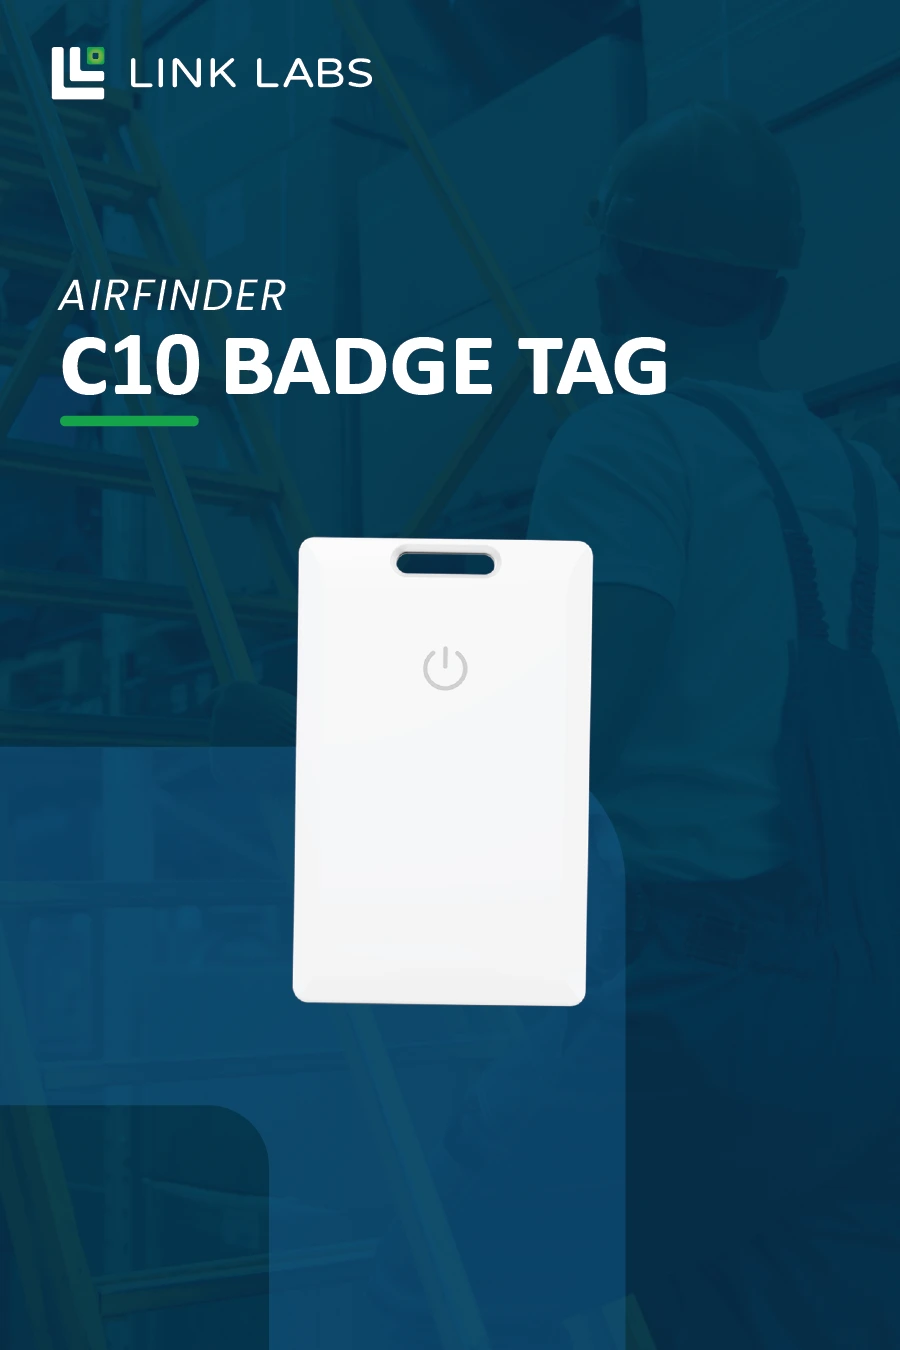 C10 badge tag